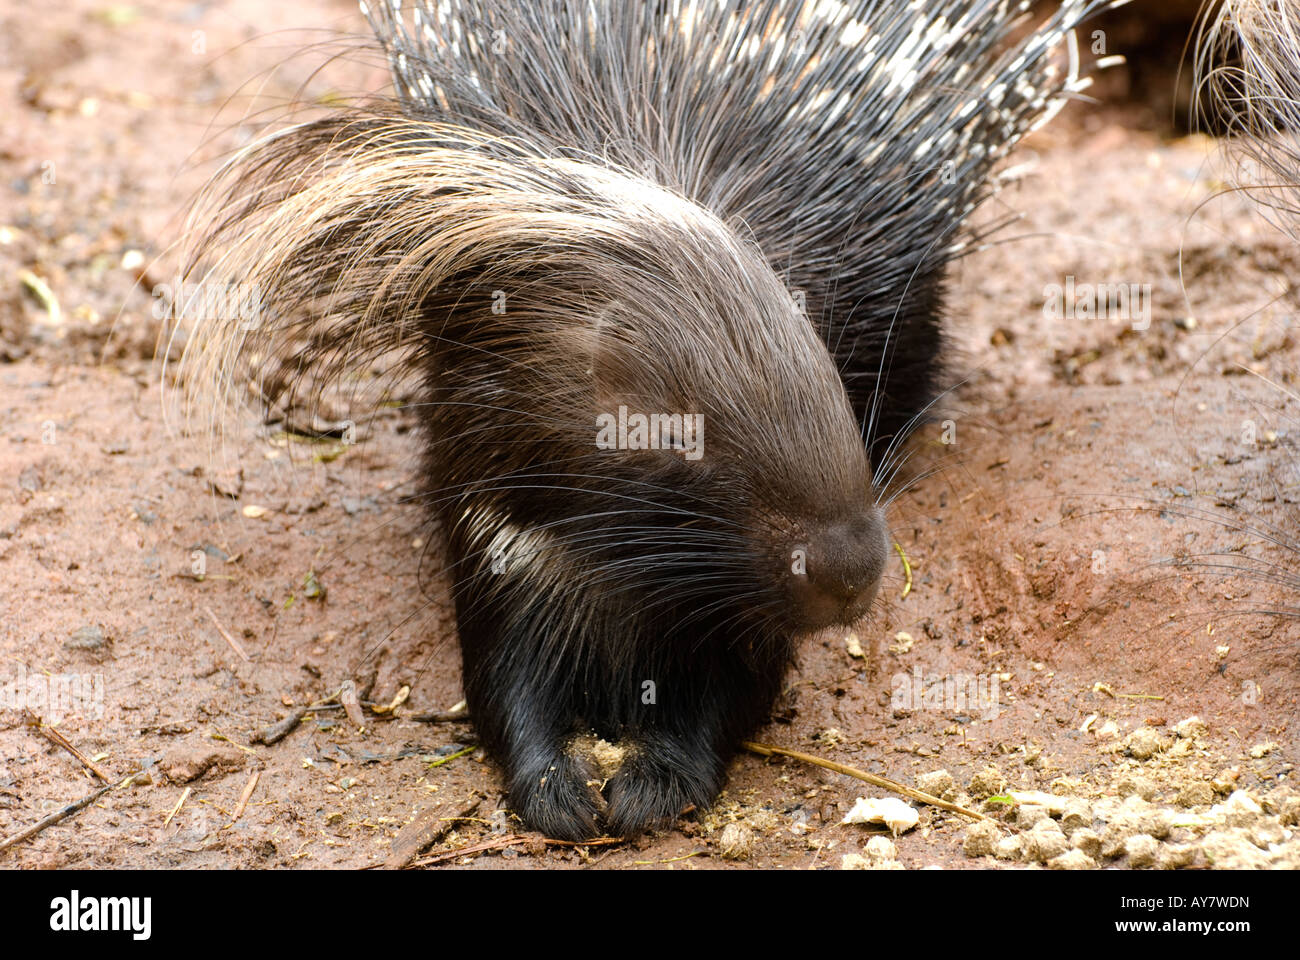 Porcupine eating food Stock Photo - Alamy